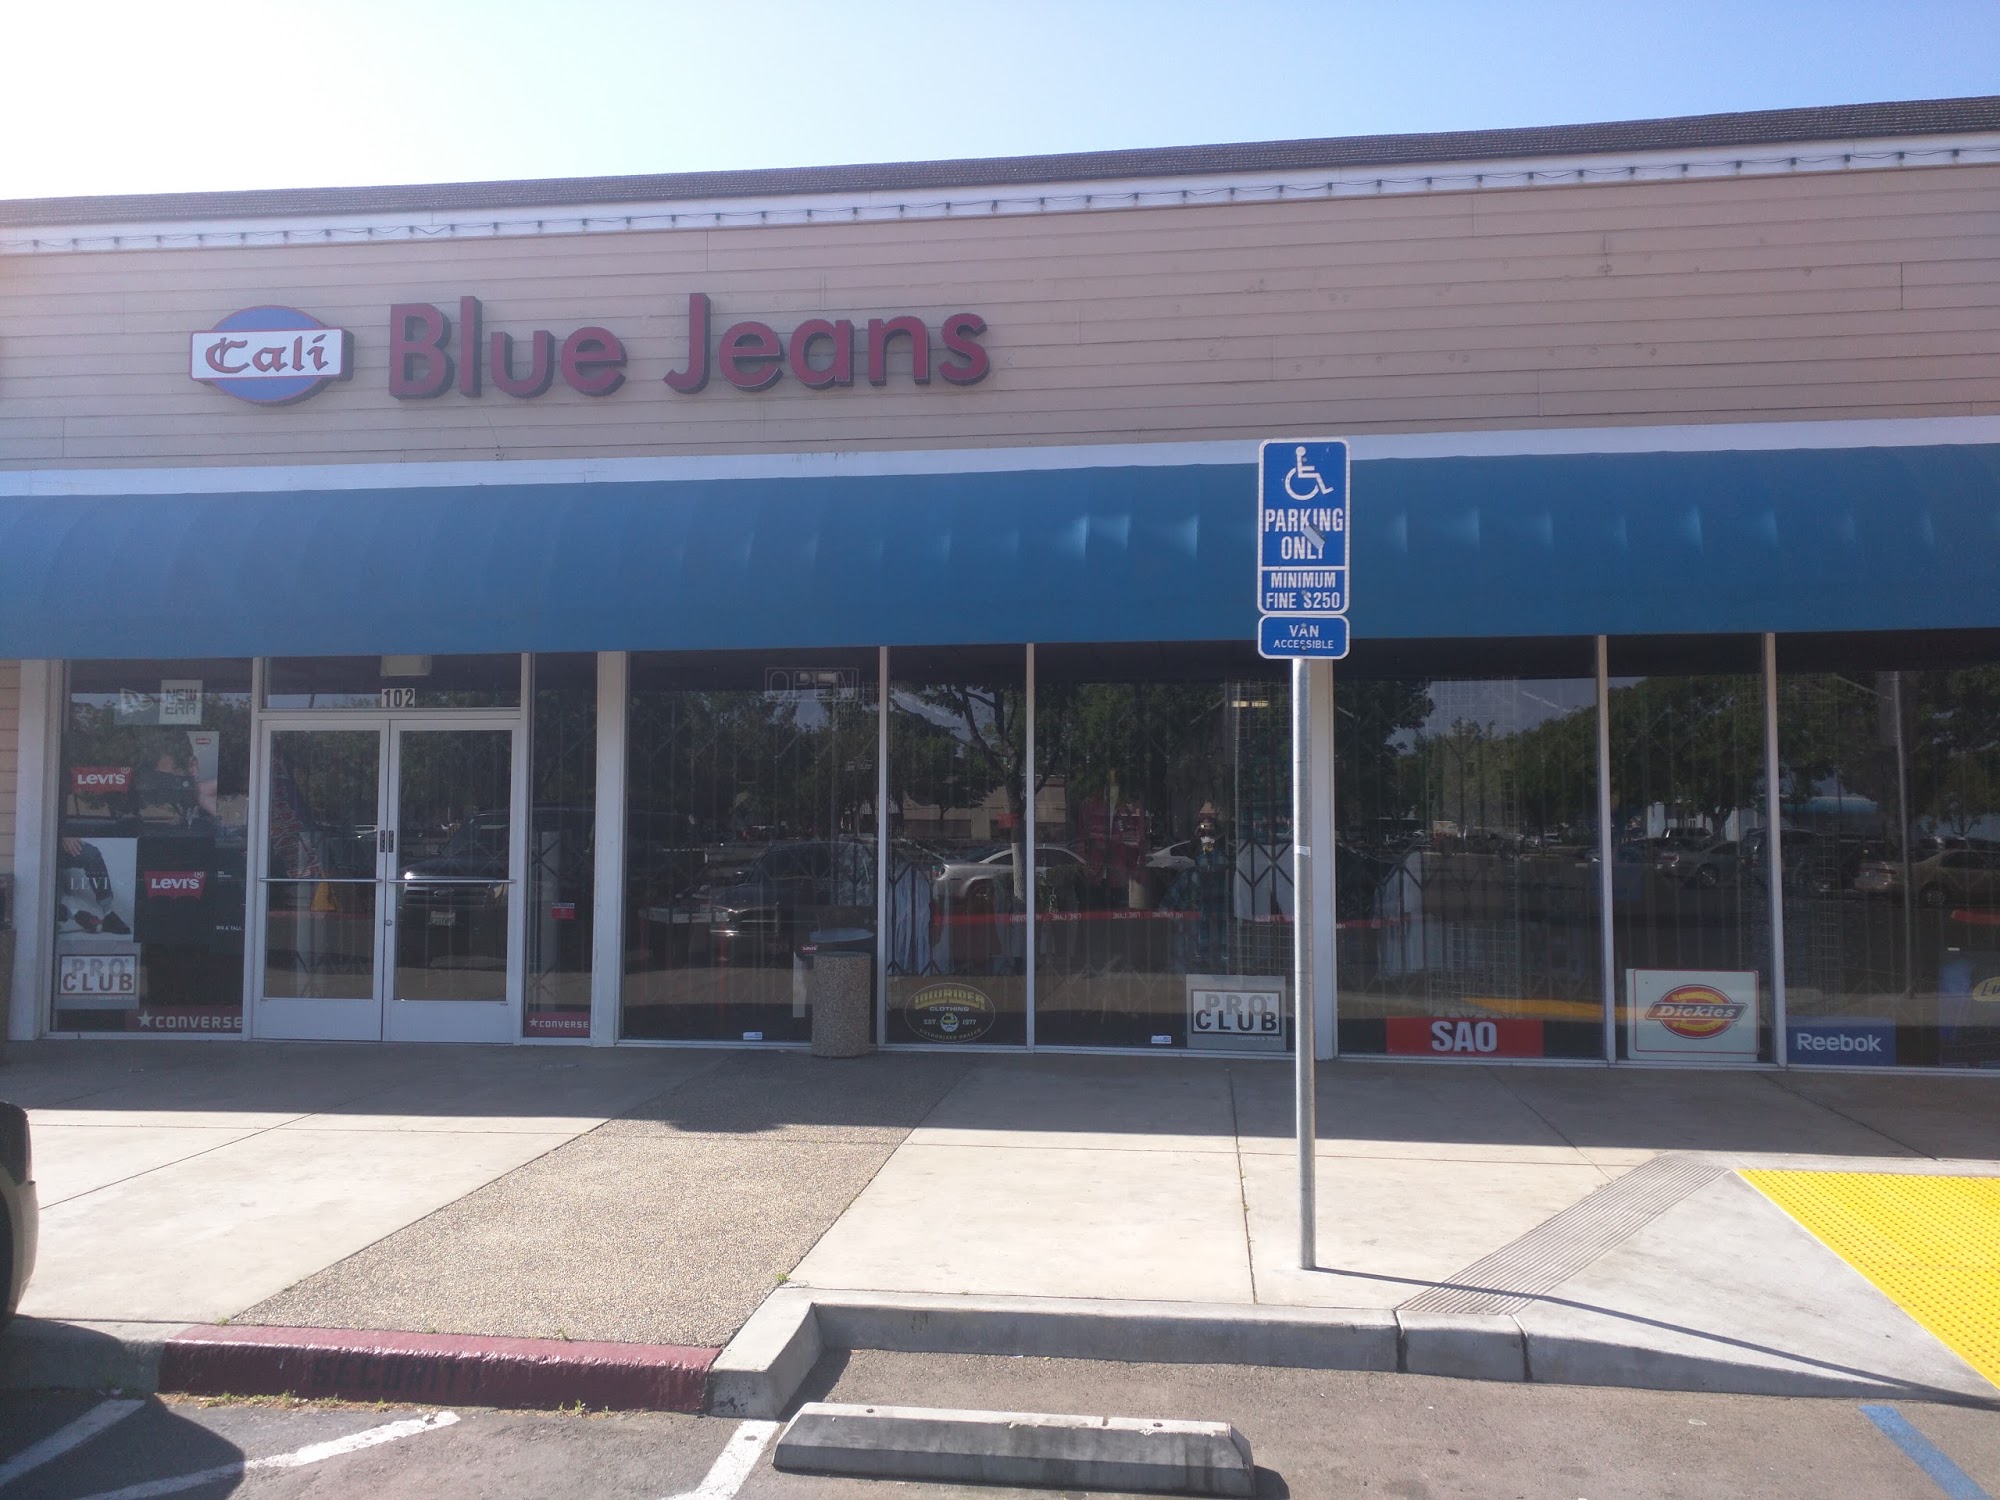 Cali Blue Jeans